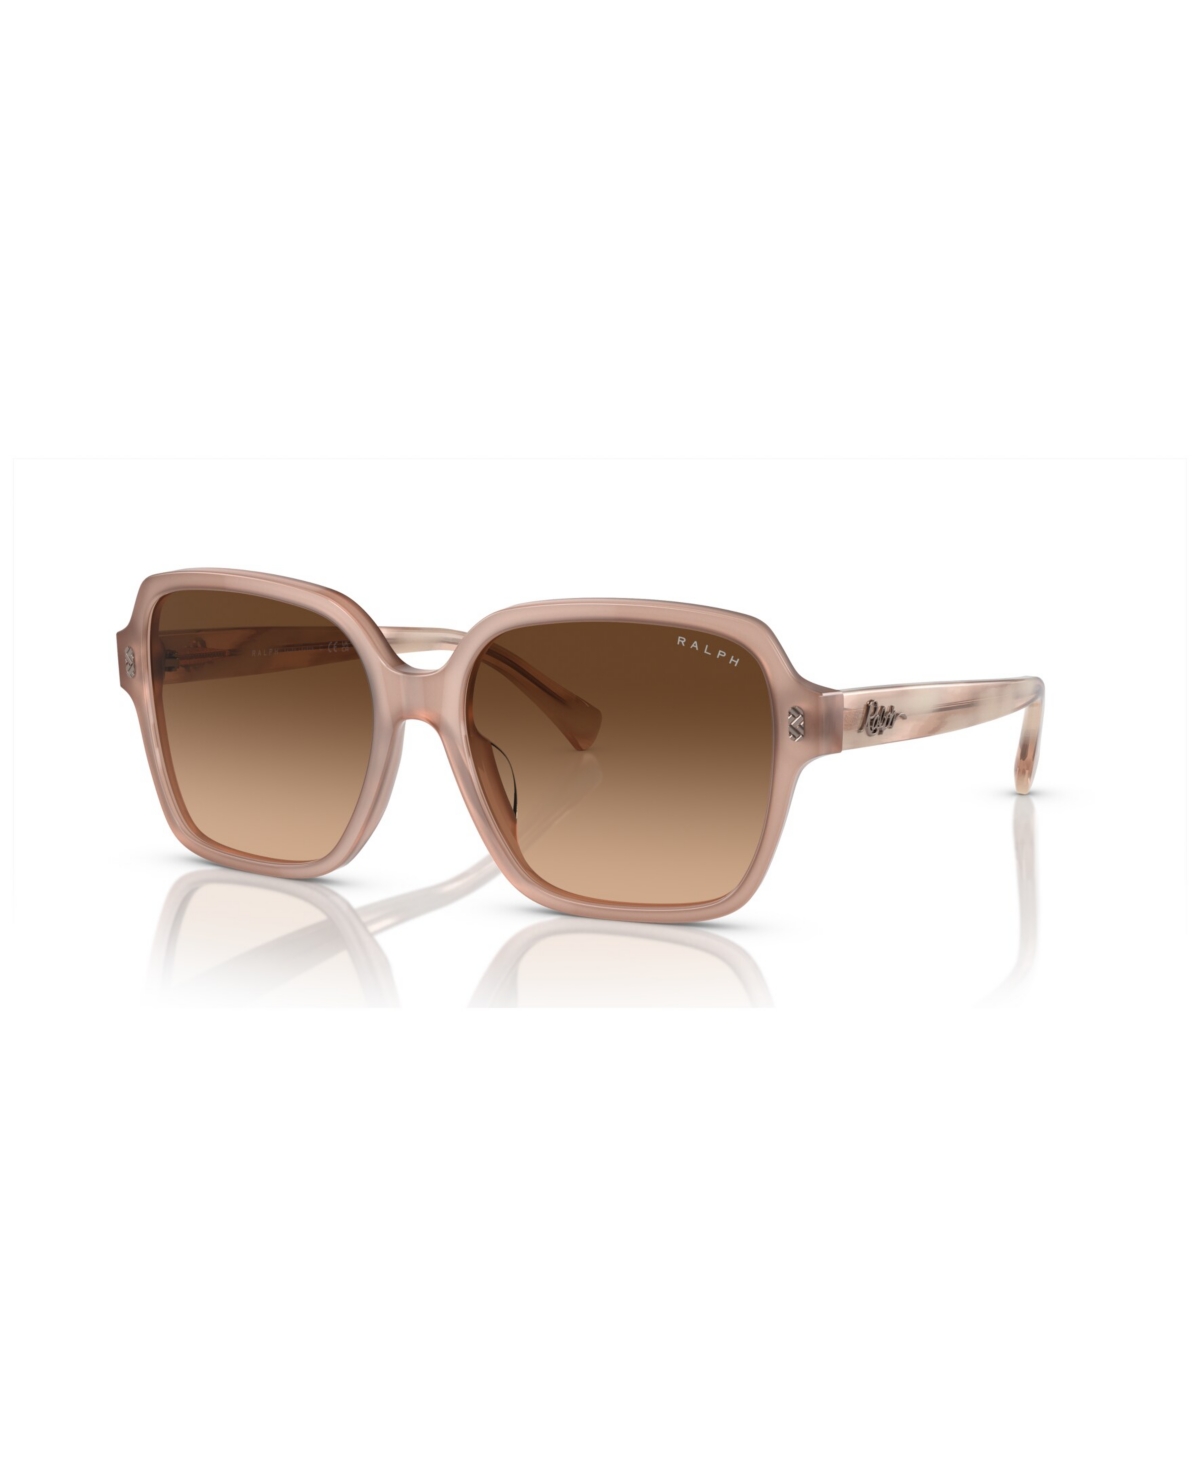 Women's Sunglasses, Gradient RA5304U - Shiny Opal Rose Beige